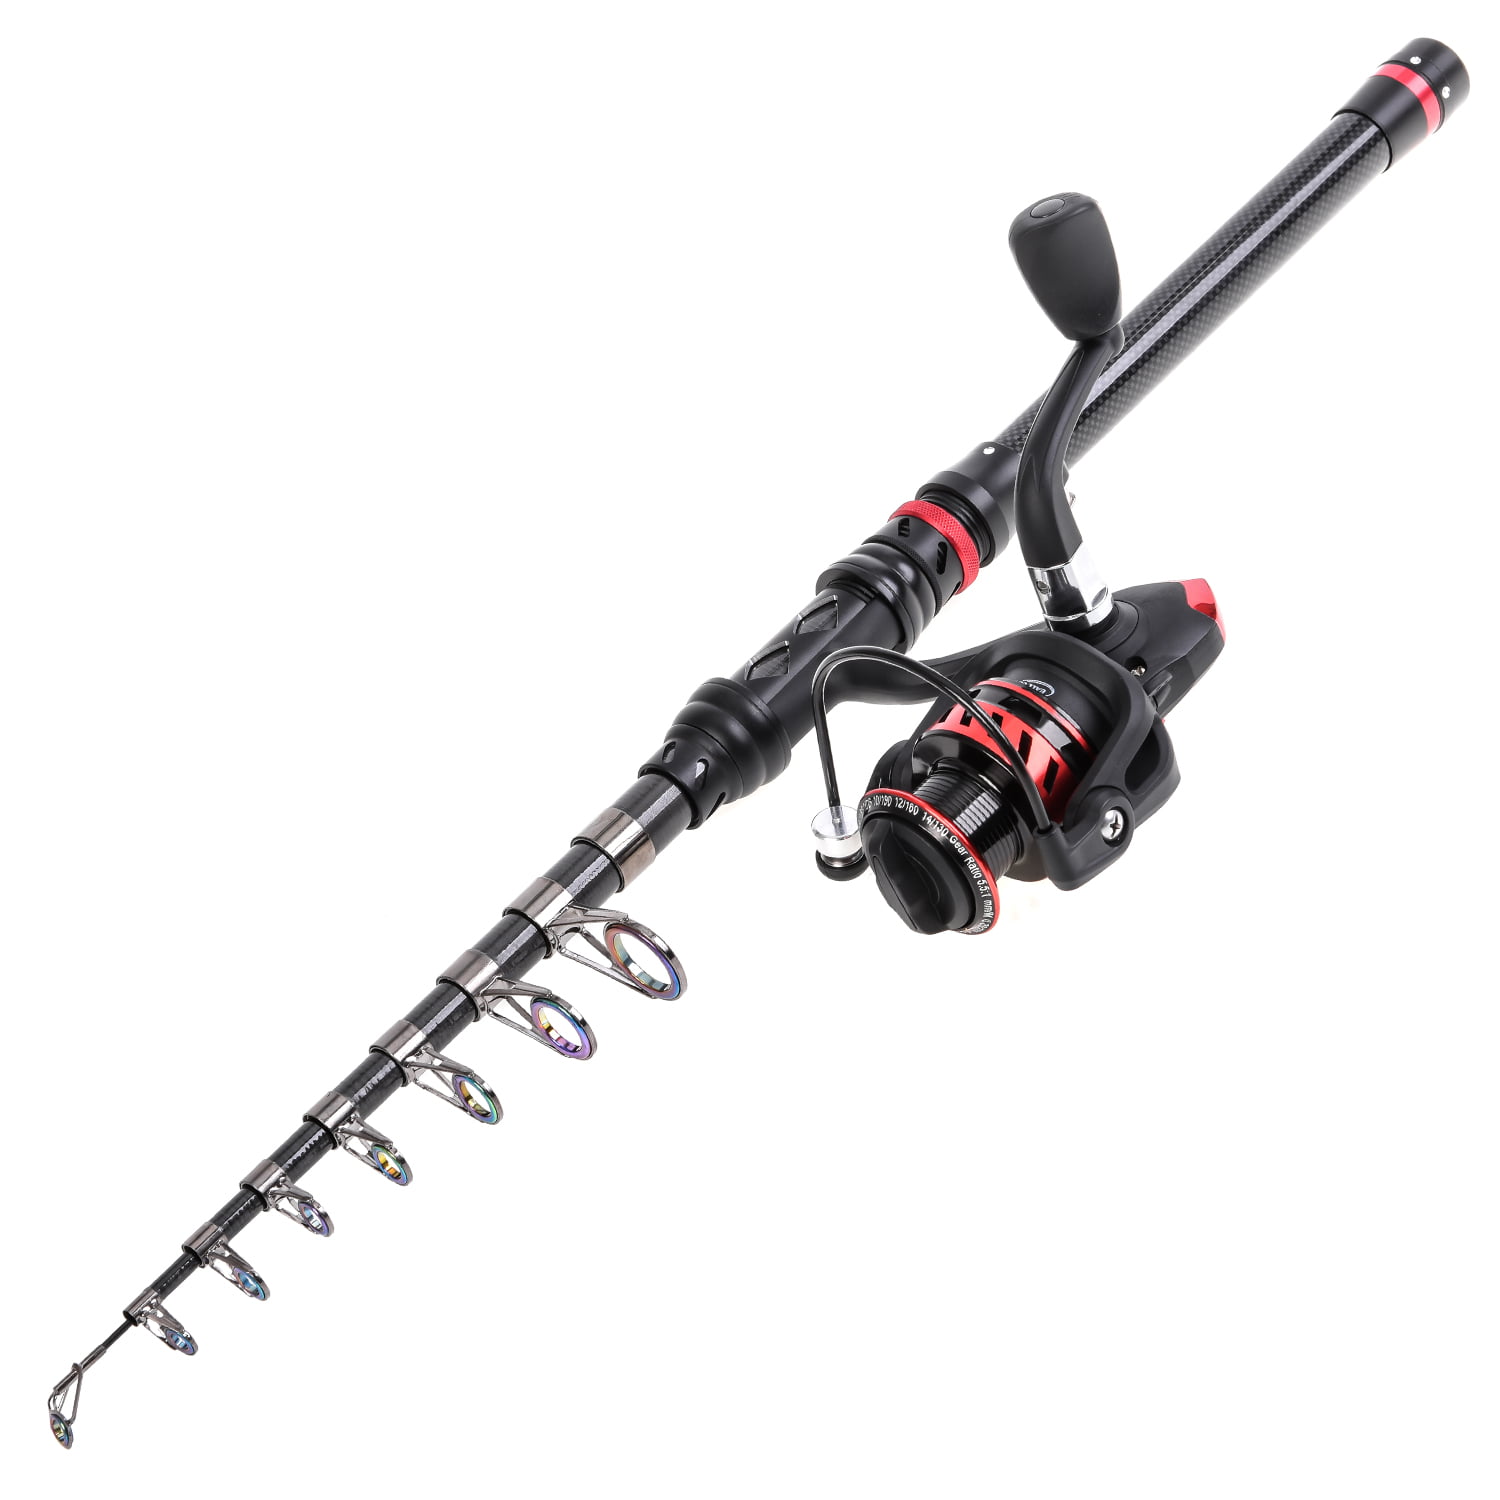 Blusea 1.8-3.0M Telescopic Fishing Rod Spinning Reel Combo Carbon Fiber Pole Set 